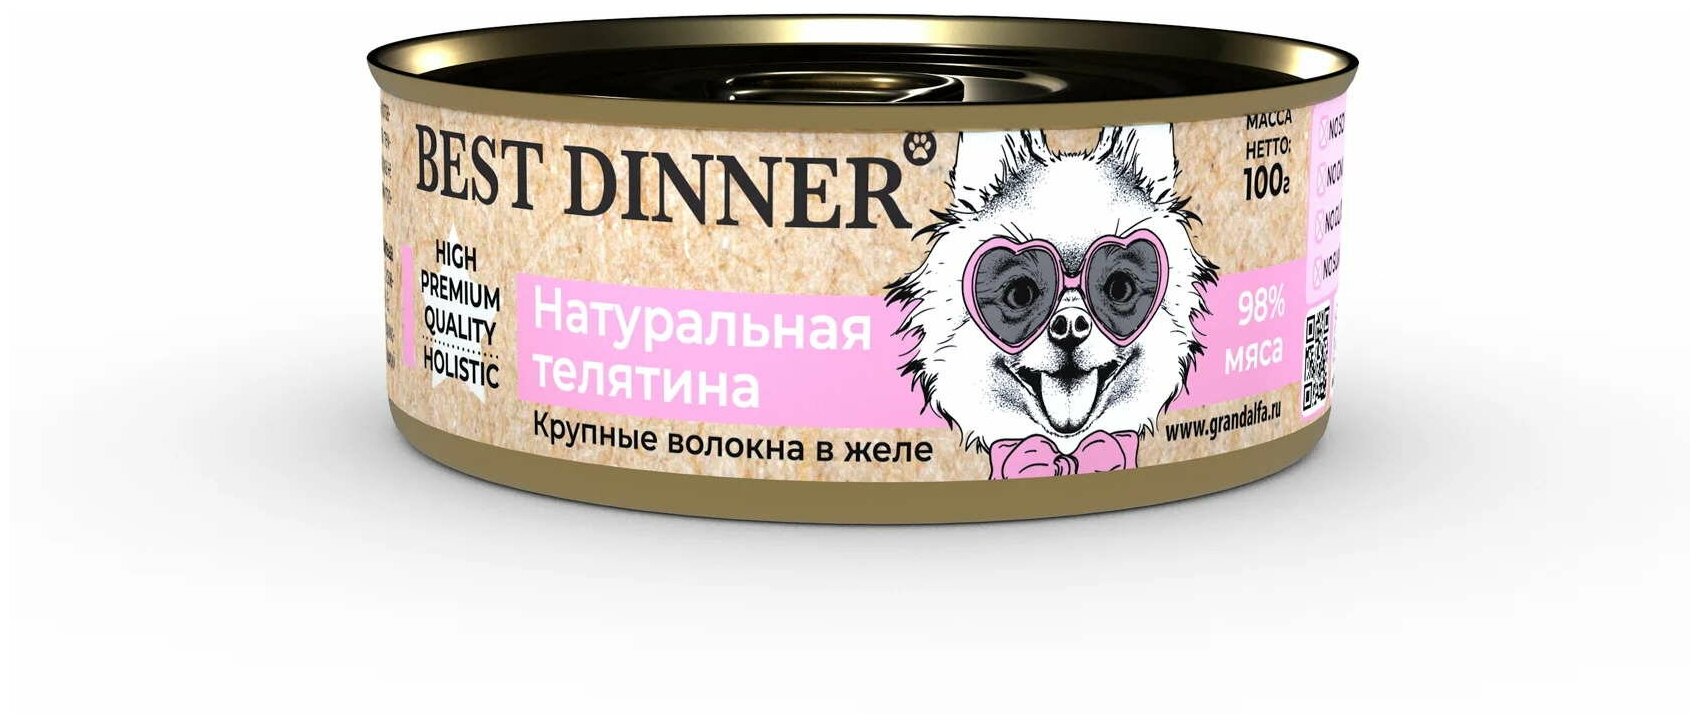 Консервы для собак Best Dinner Премиум High Premium "Натуральная телятина", 0,1 кг